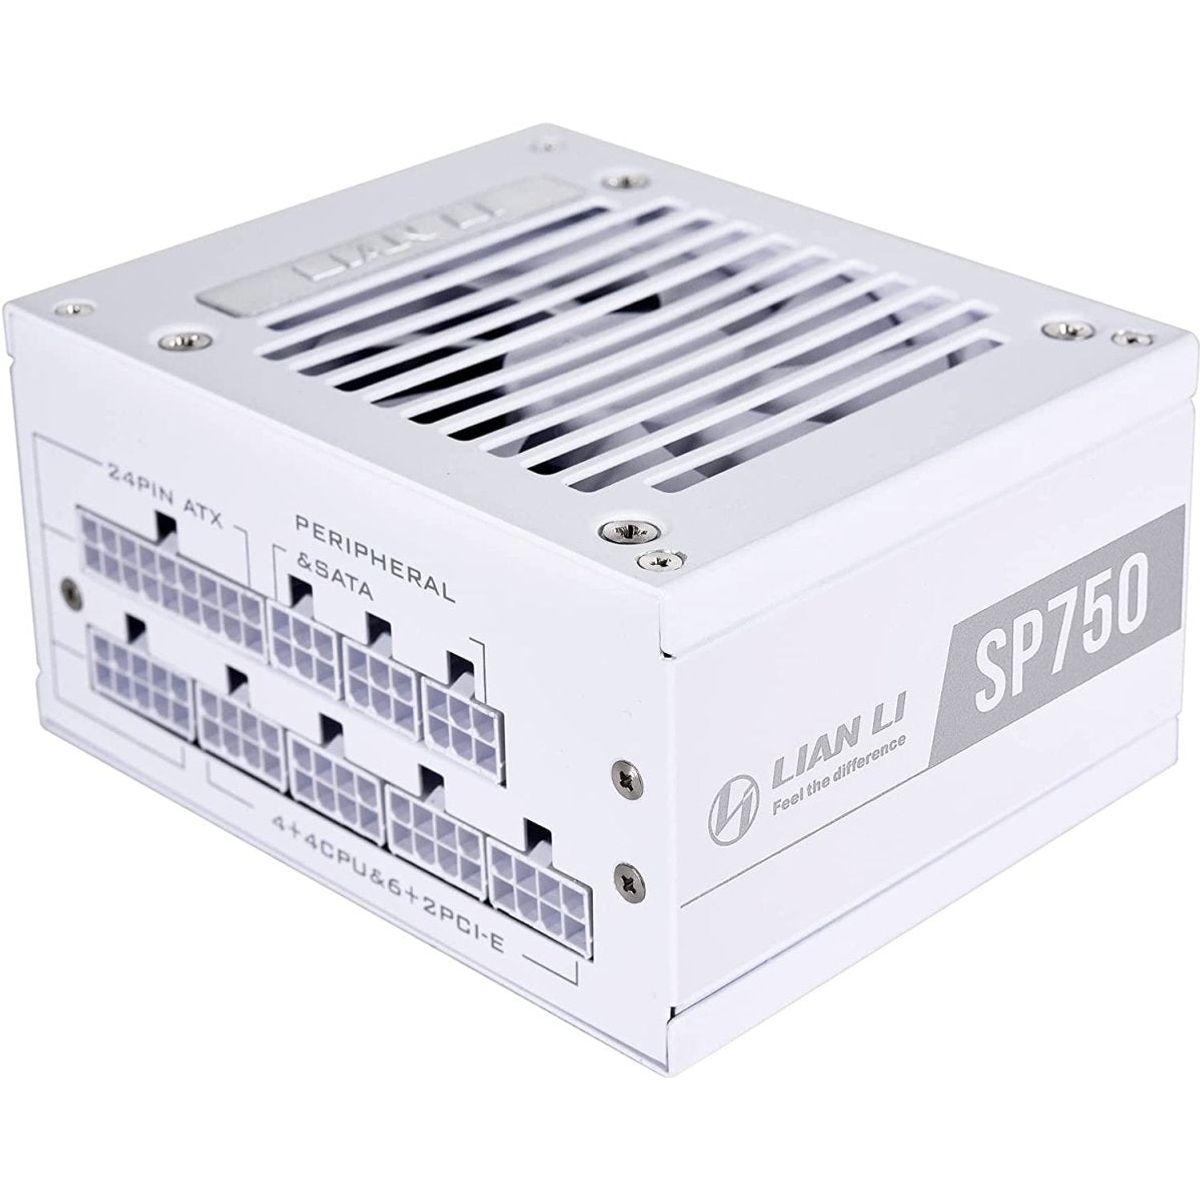 Lian Li SP750 WHITE - SFX PSU 750w Gold - SFF PC Power Supply - Computer Power Supplies - Gamertech.shop